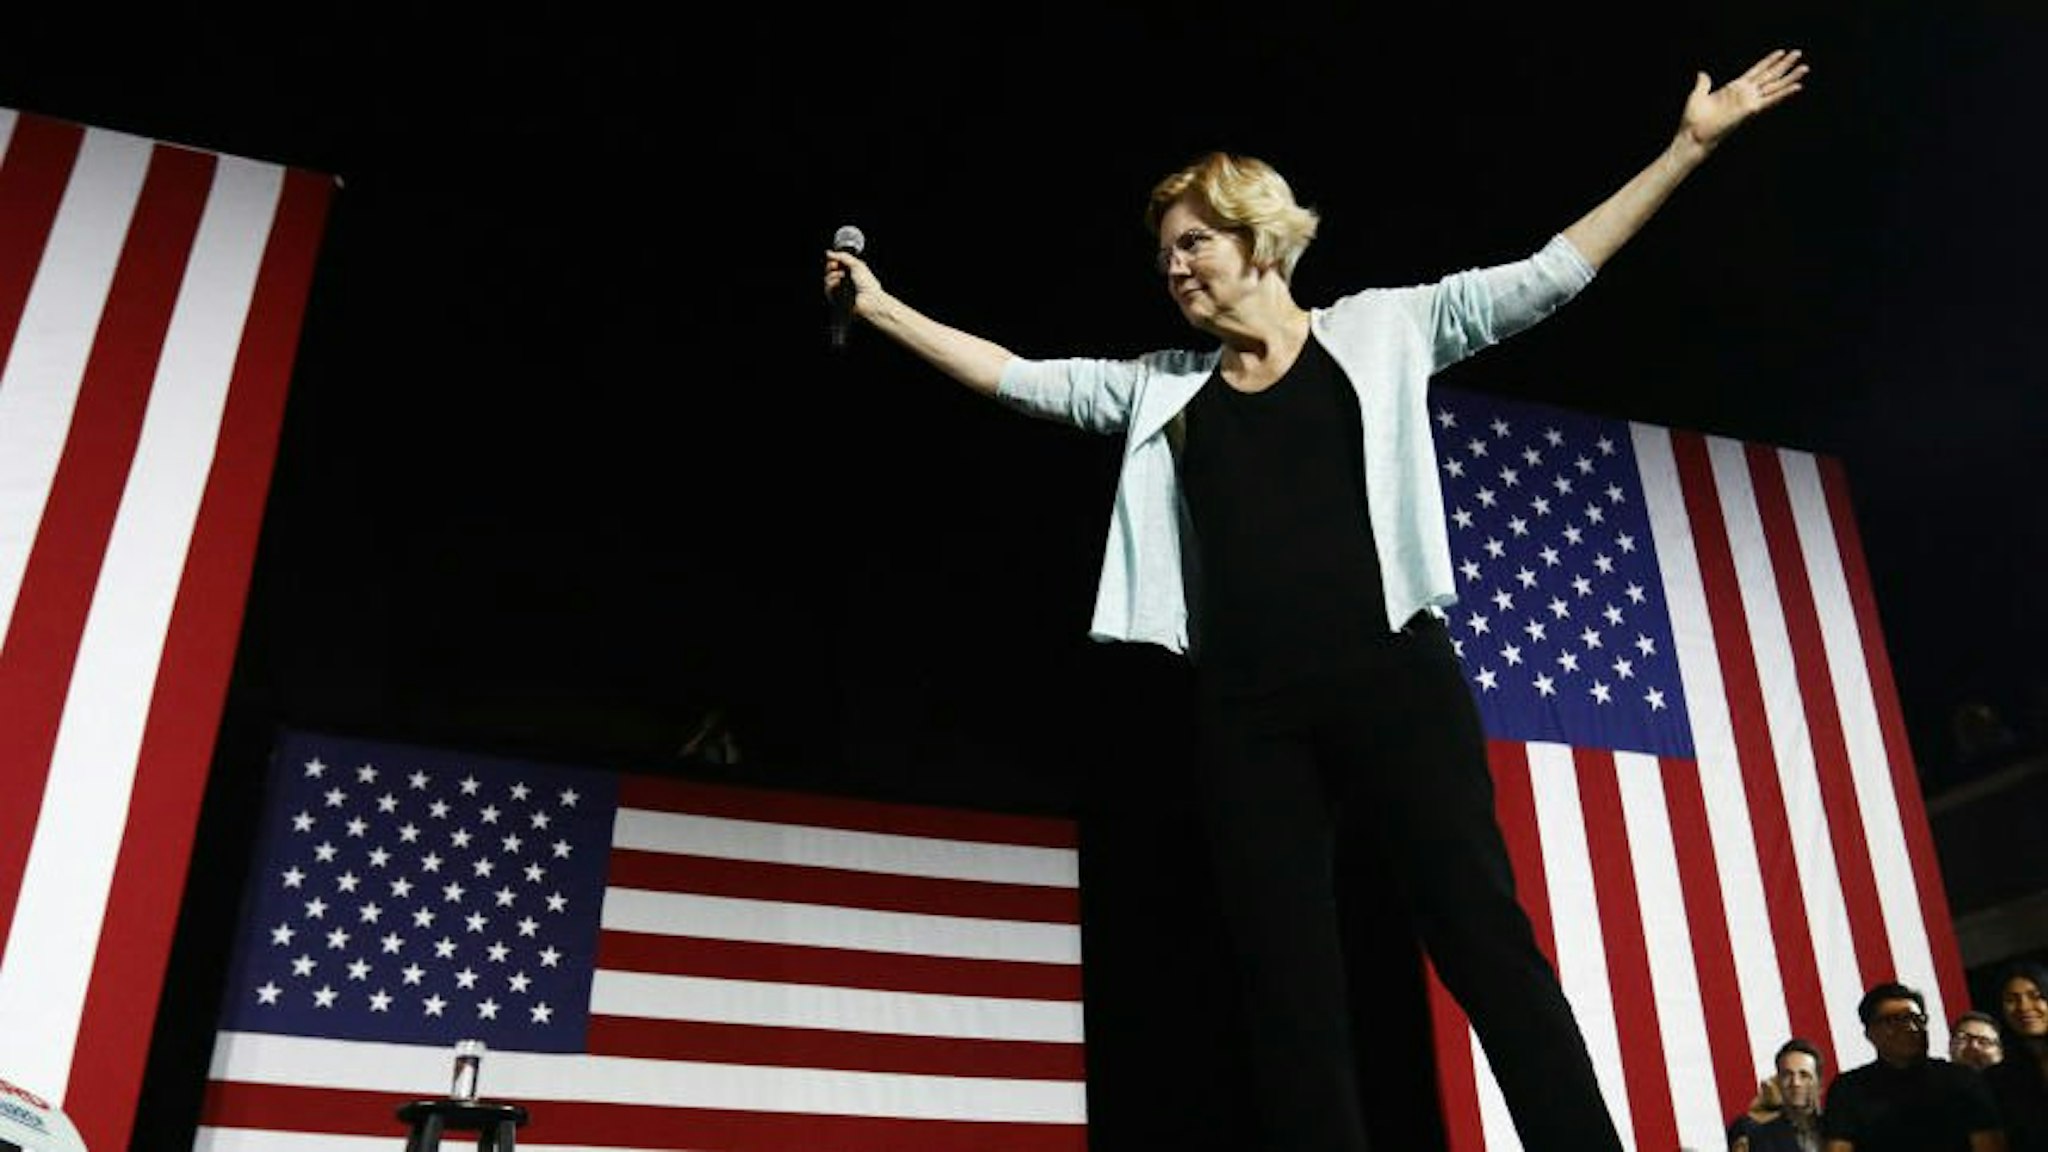 Democratic Presidential candidate Senator for Massachusetts Elizabeth Warren prepares to speak during a town hall meeting at Shrine Auditorium on August 21, 2019 in Los Angeles, California.